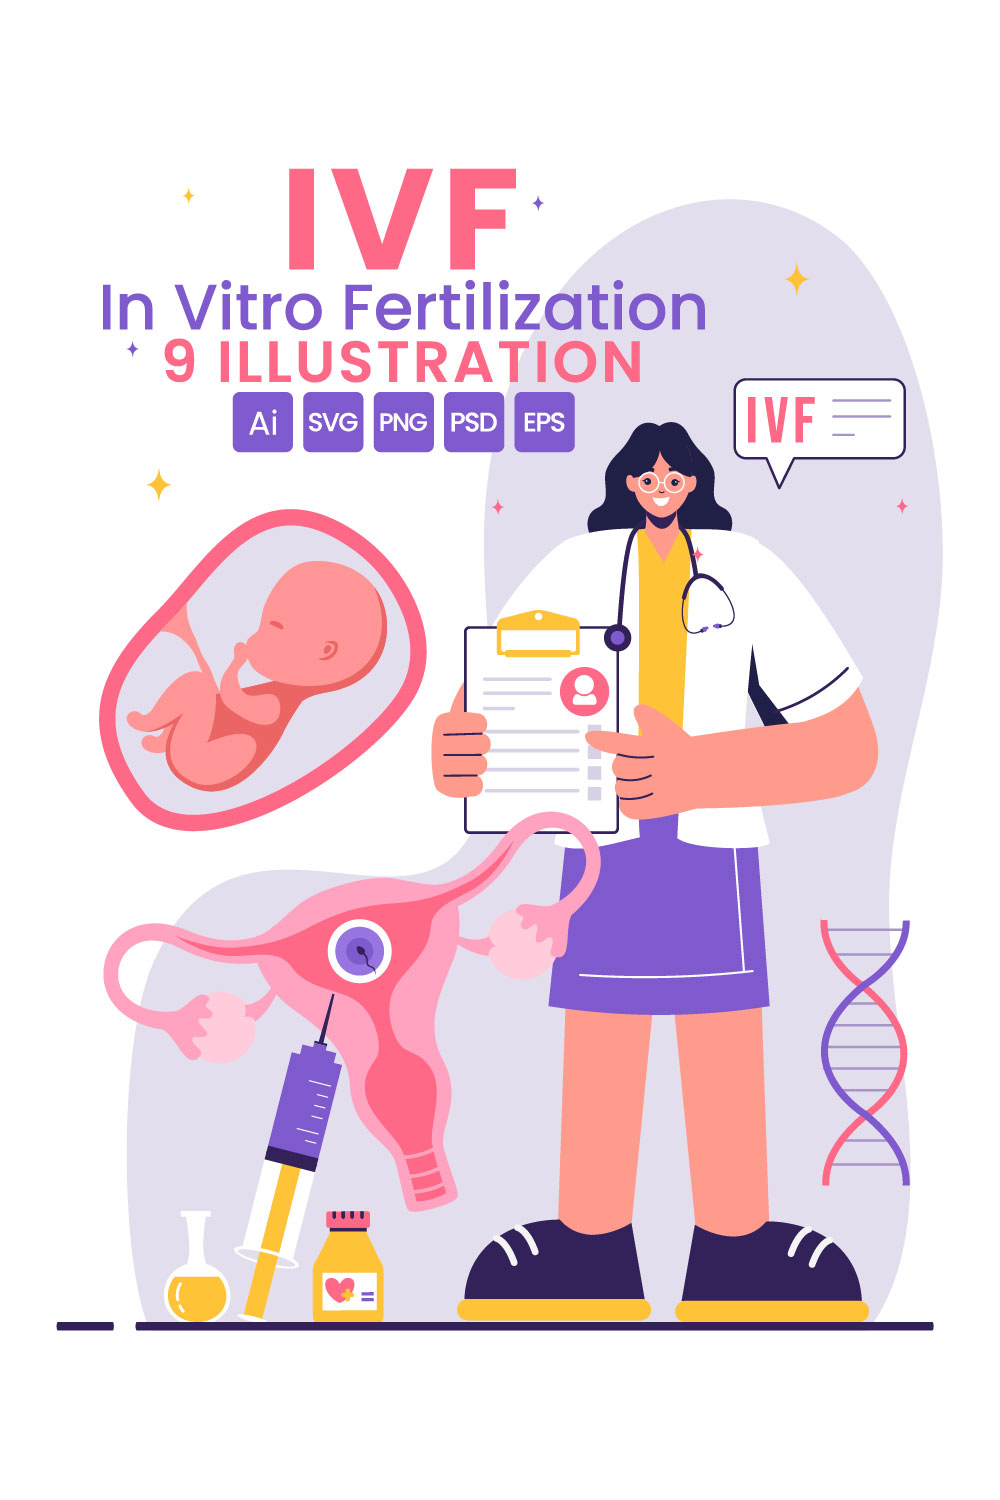 9 IVF or In Vitro Fertilization Illustration pinterest preview image.